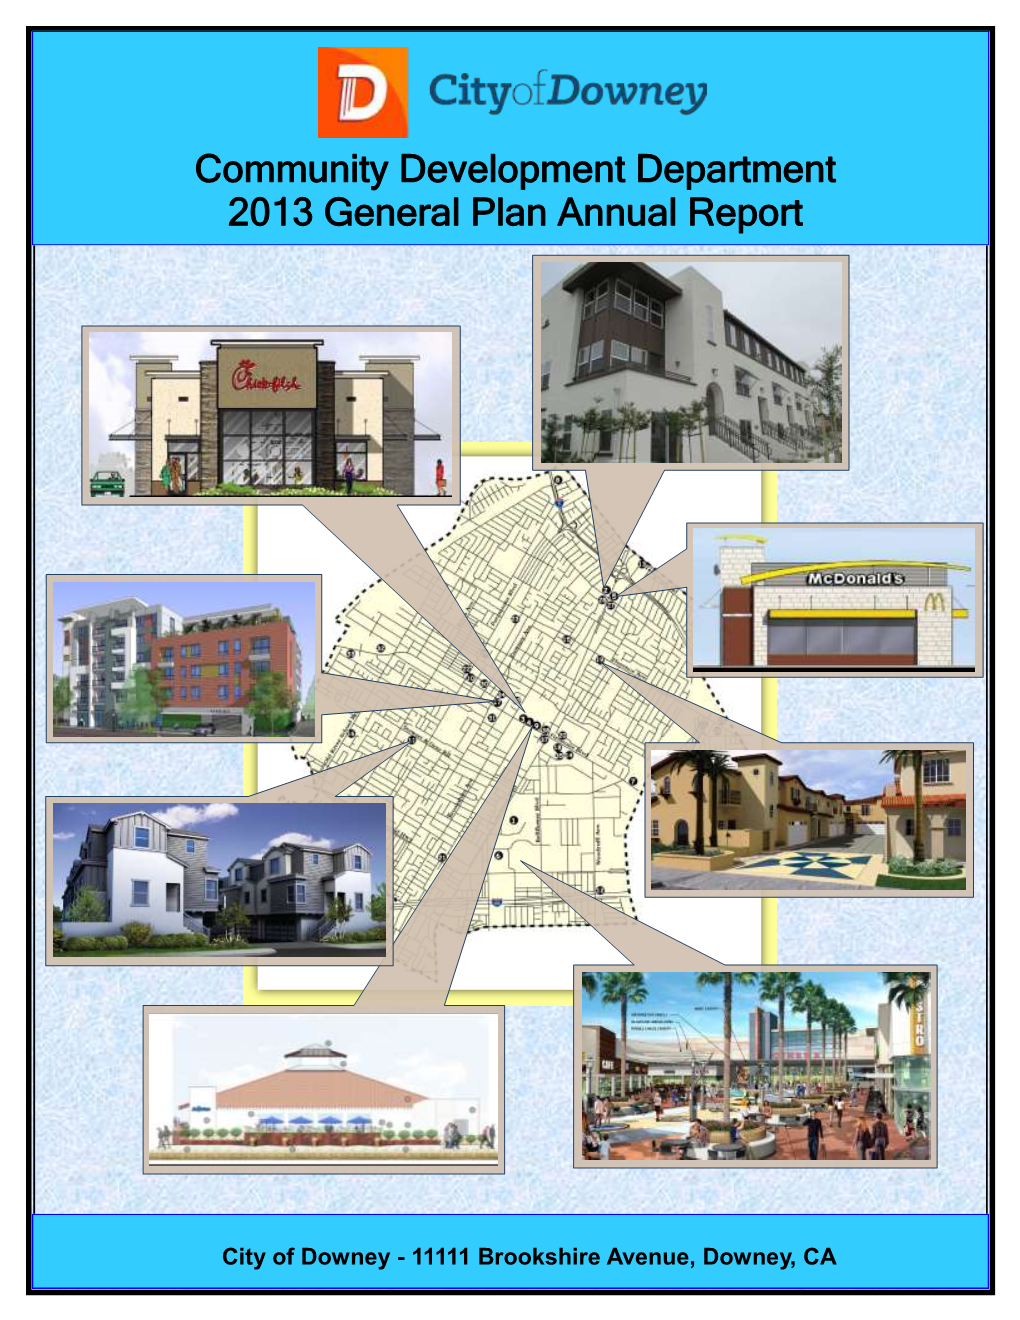 Community Development Department 2013 General Plan Annual Report